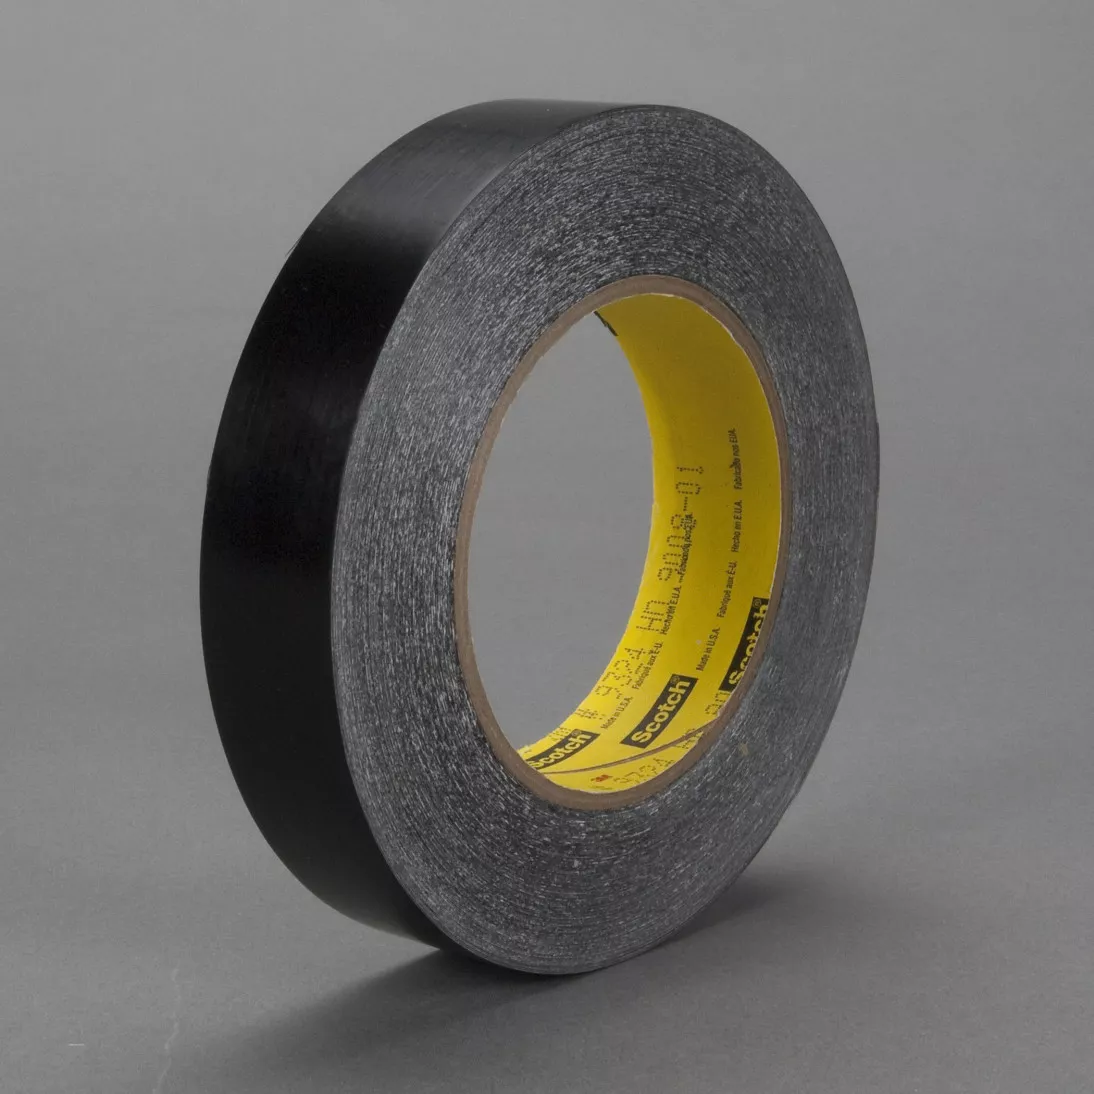 3M™ Squeak Reduction Tape 9324, Black, 19 in x 36 yd, 7.2 mil, 1 roll
per case